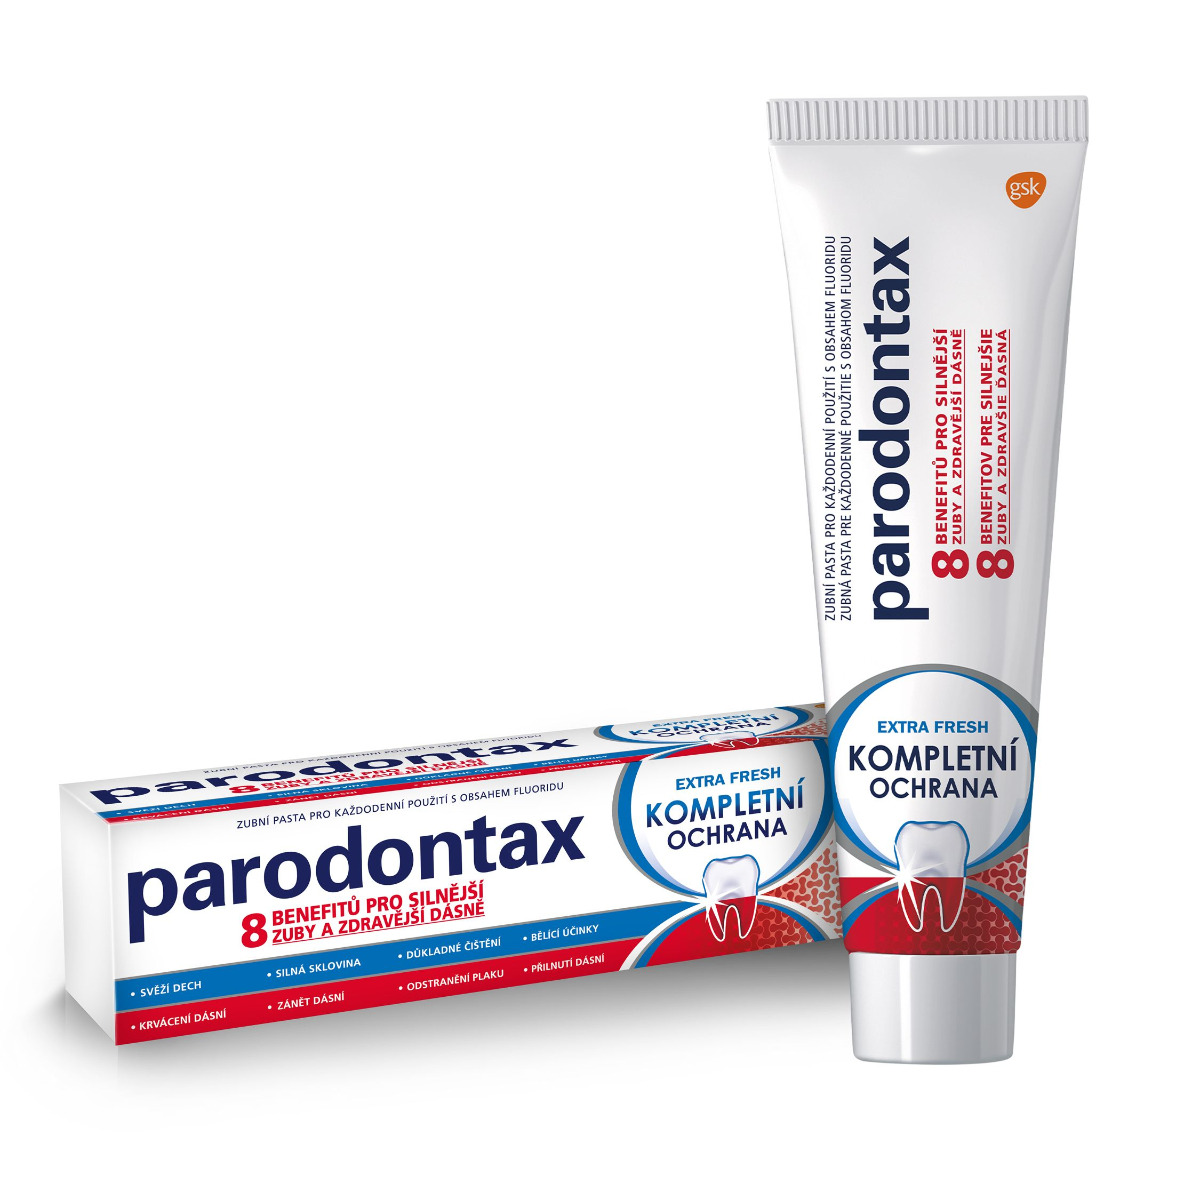 Parodontax Kompletní ochrana extra fresh zubní pasta 75 ml Parodontax